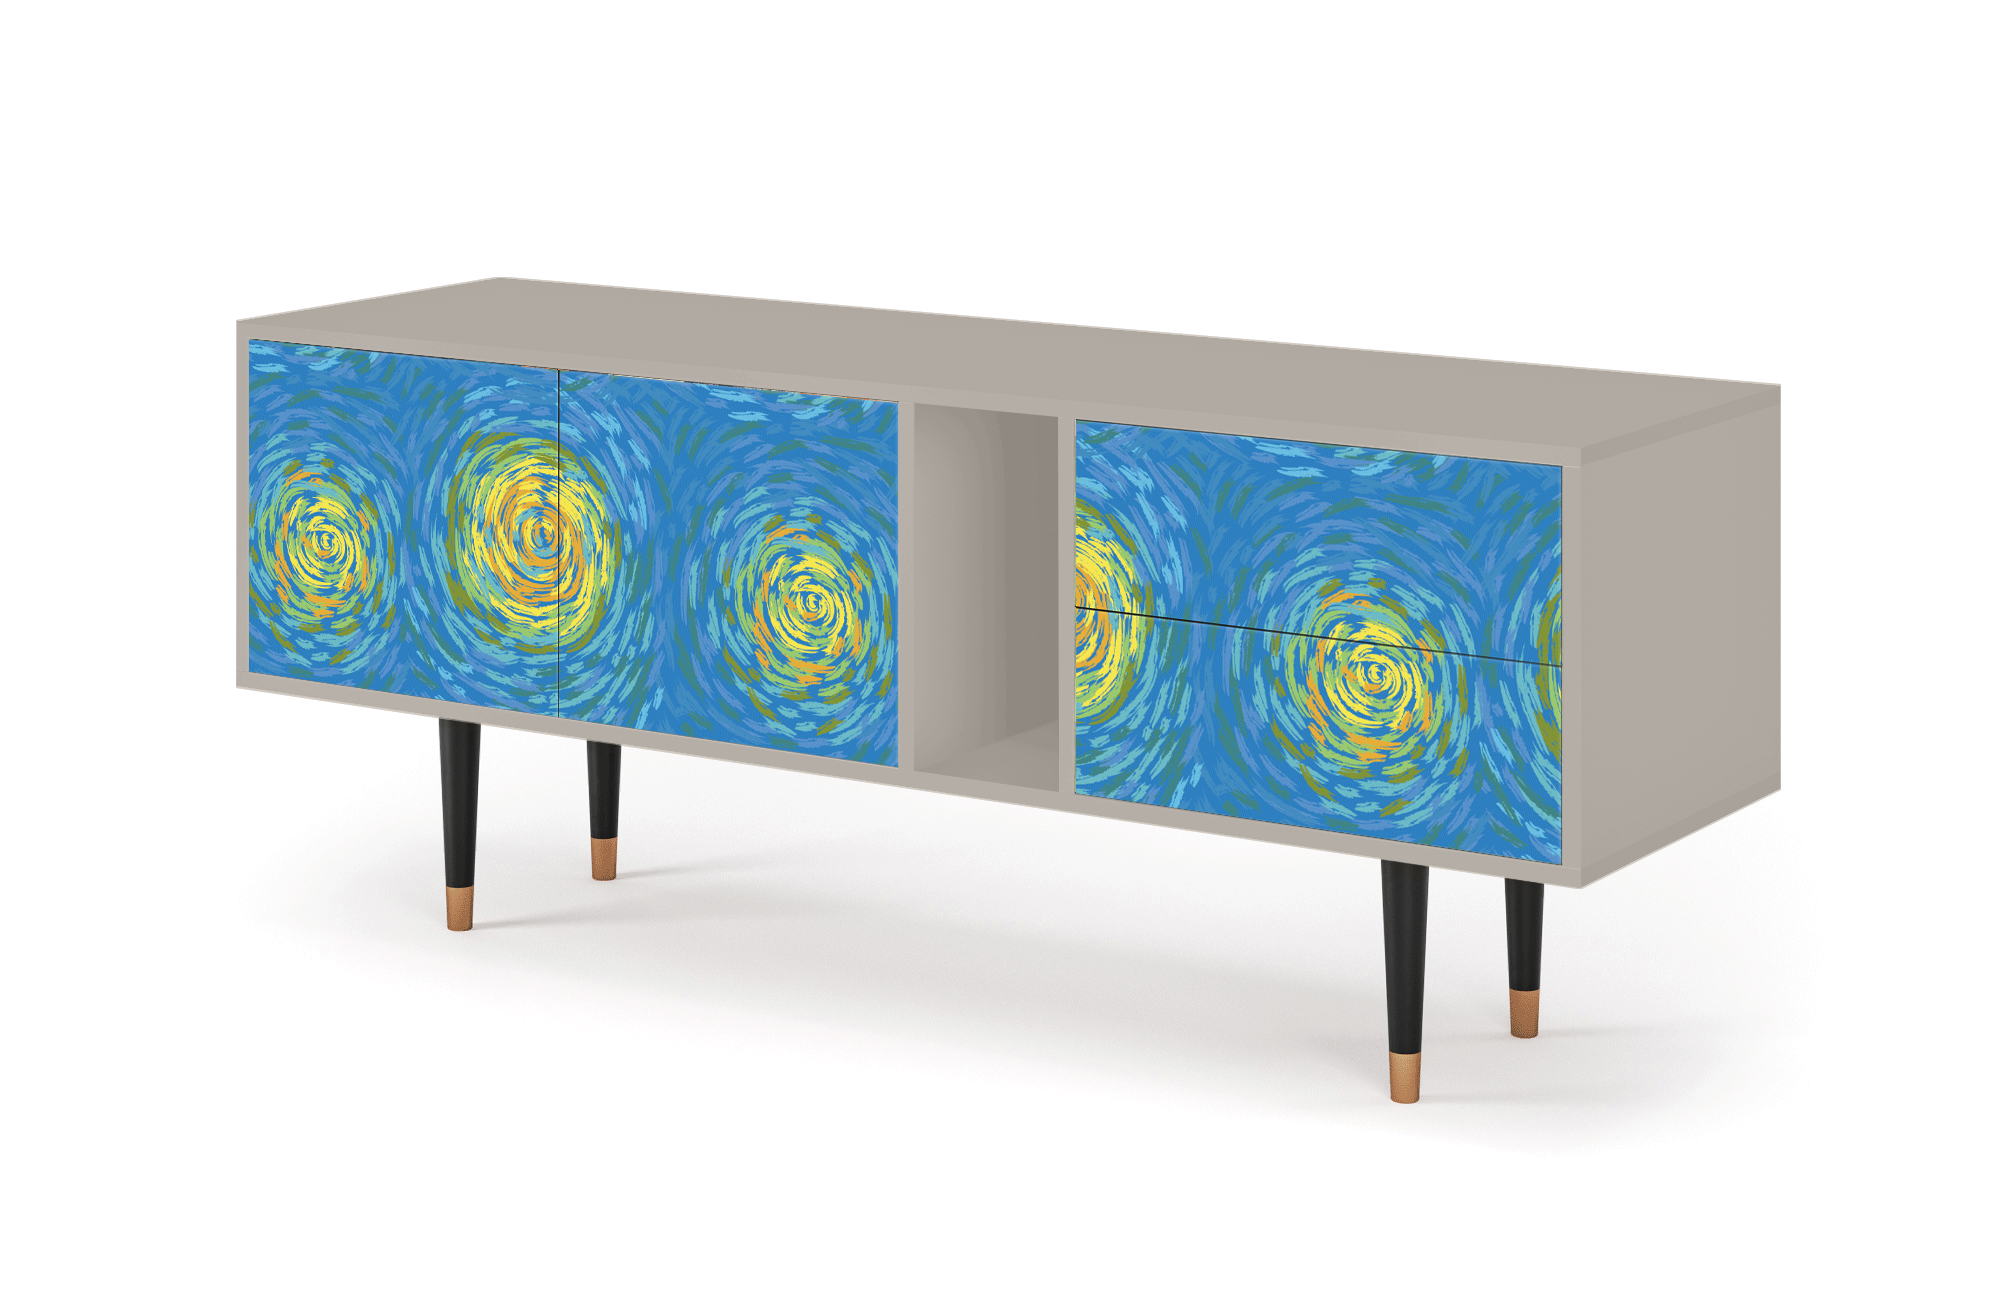 ТВ-Тумба - STORYZ - T1 Van Gogh Lights, 170 x 69 x 48 см, Сатин - фотография № 3